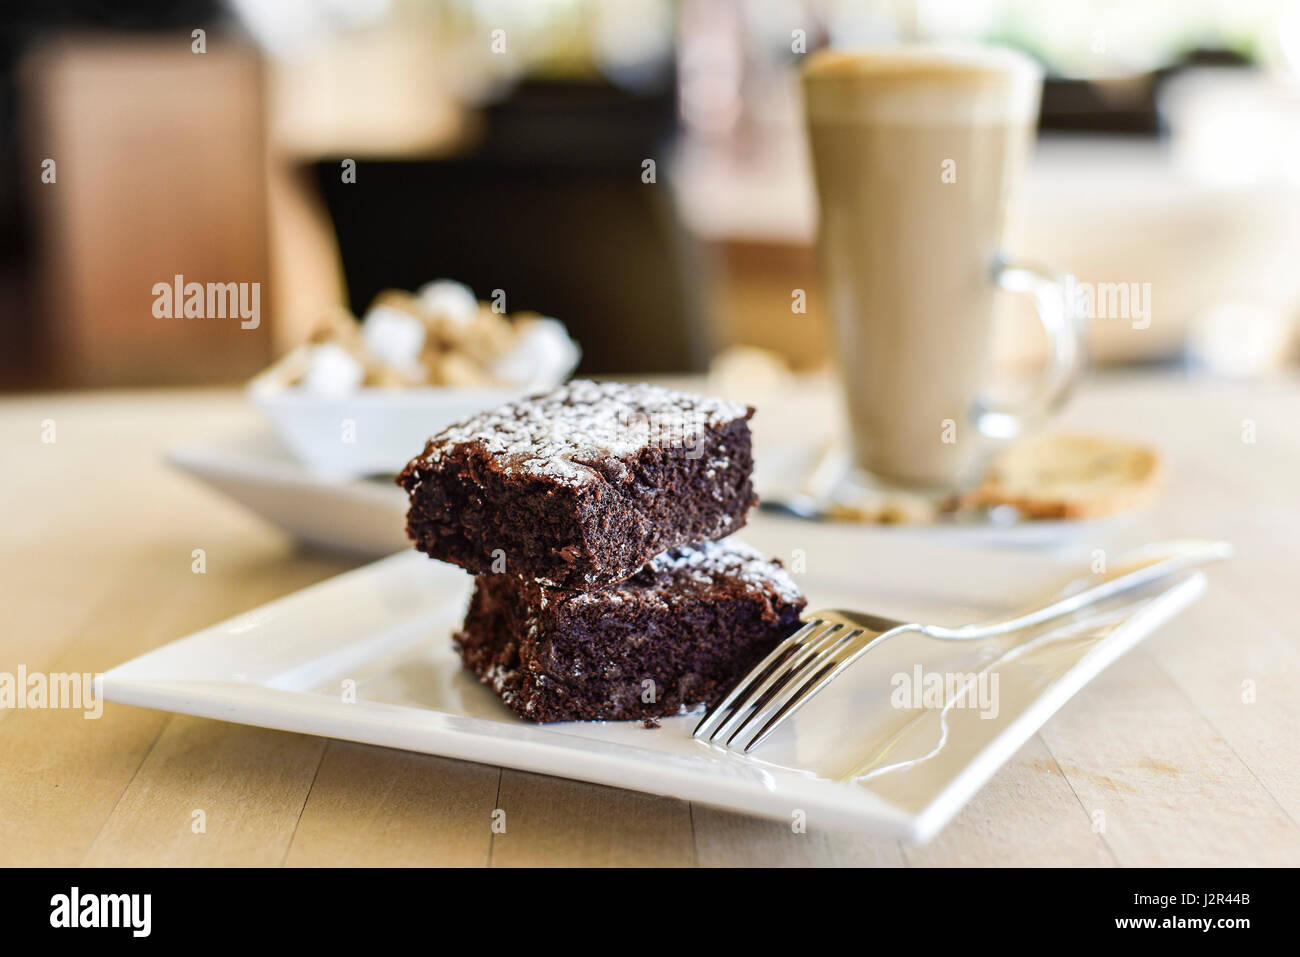 Essen zwei Chocolate Brownies Dessert Pudding süß behandeln Schokoladen-Brownies Baked Baking Gabel Teller Stockfoto